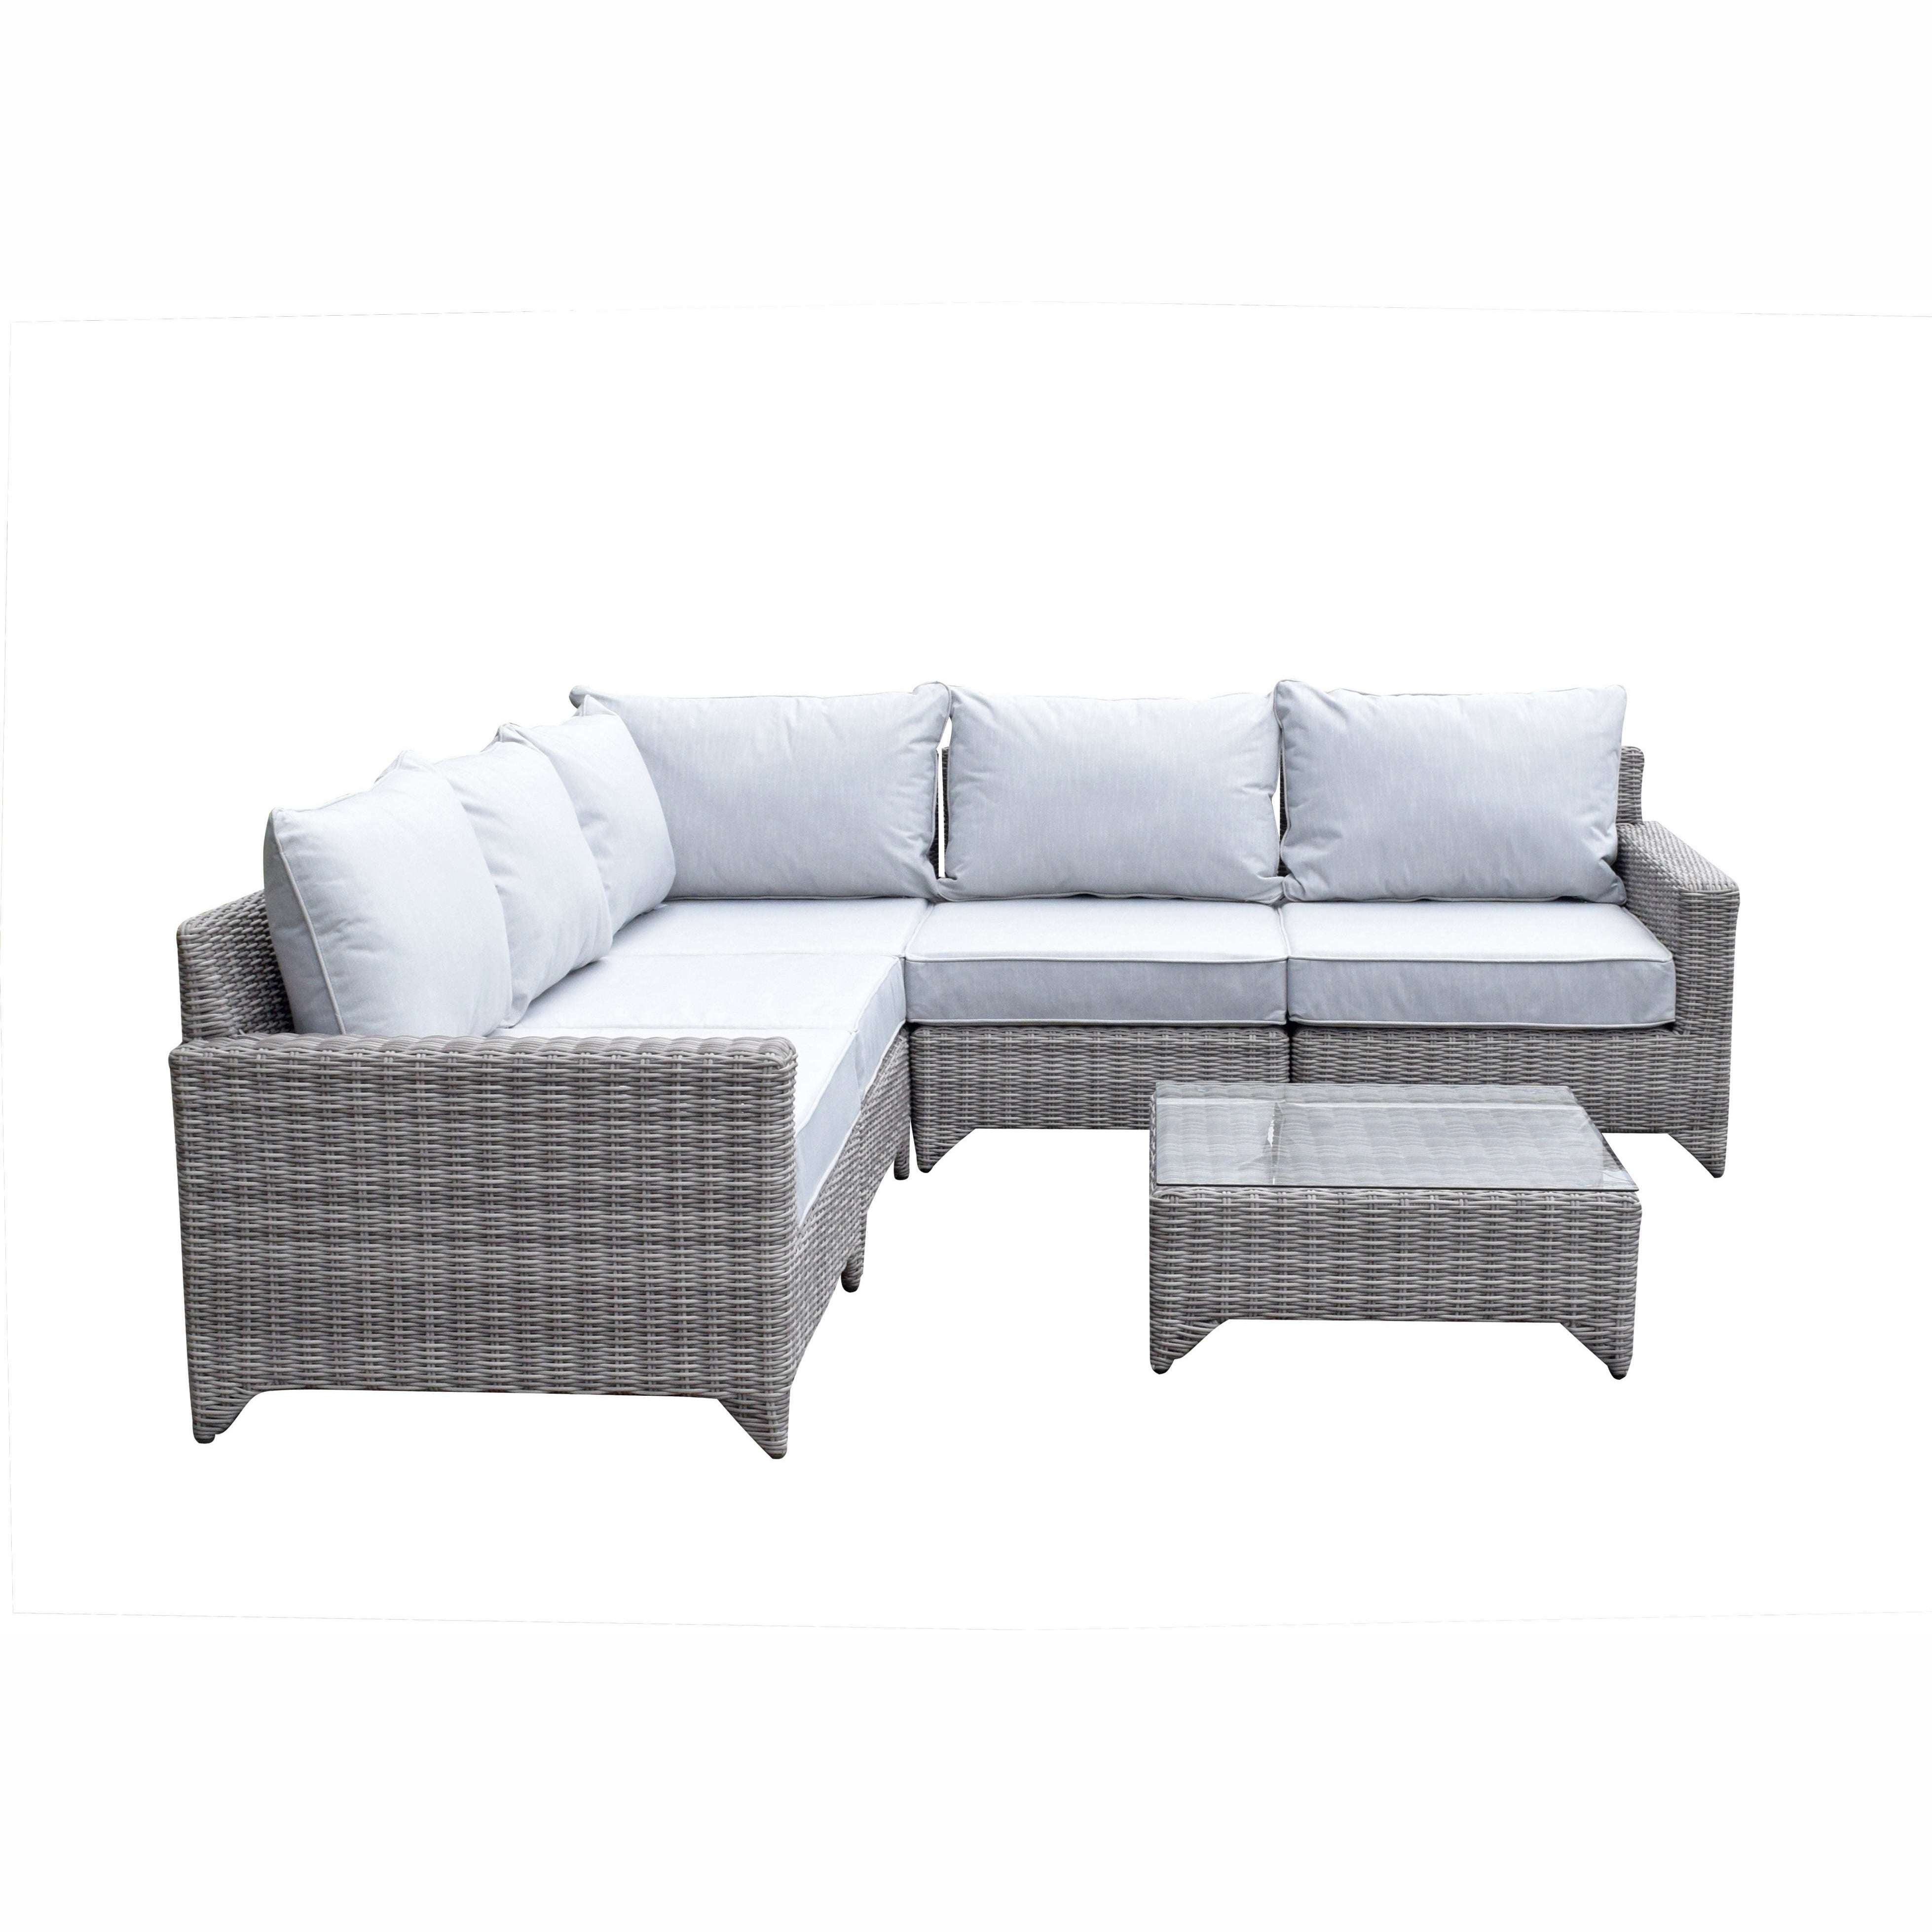 Exceptional Garden:Signature Weave Helena Modular Corner Sofa Set